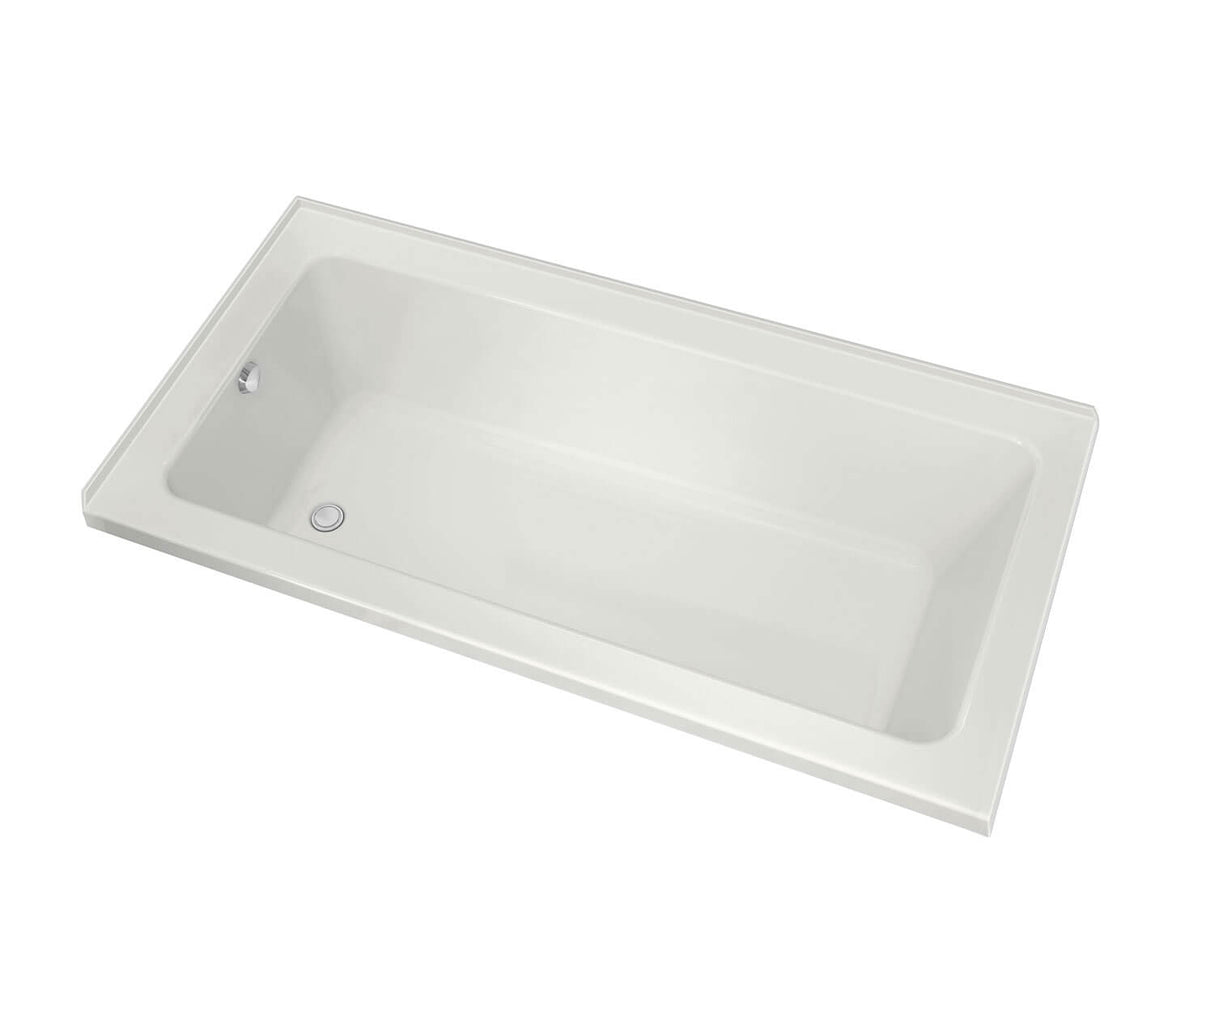 MAAX 106208-000-001-111 Pose 6636 IF Acrylic Corner Left Left-Hand Drain Bathtub in White